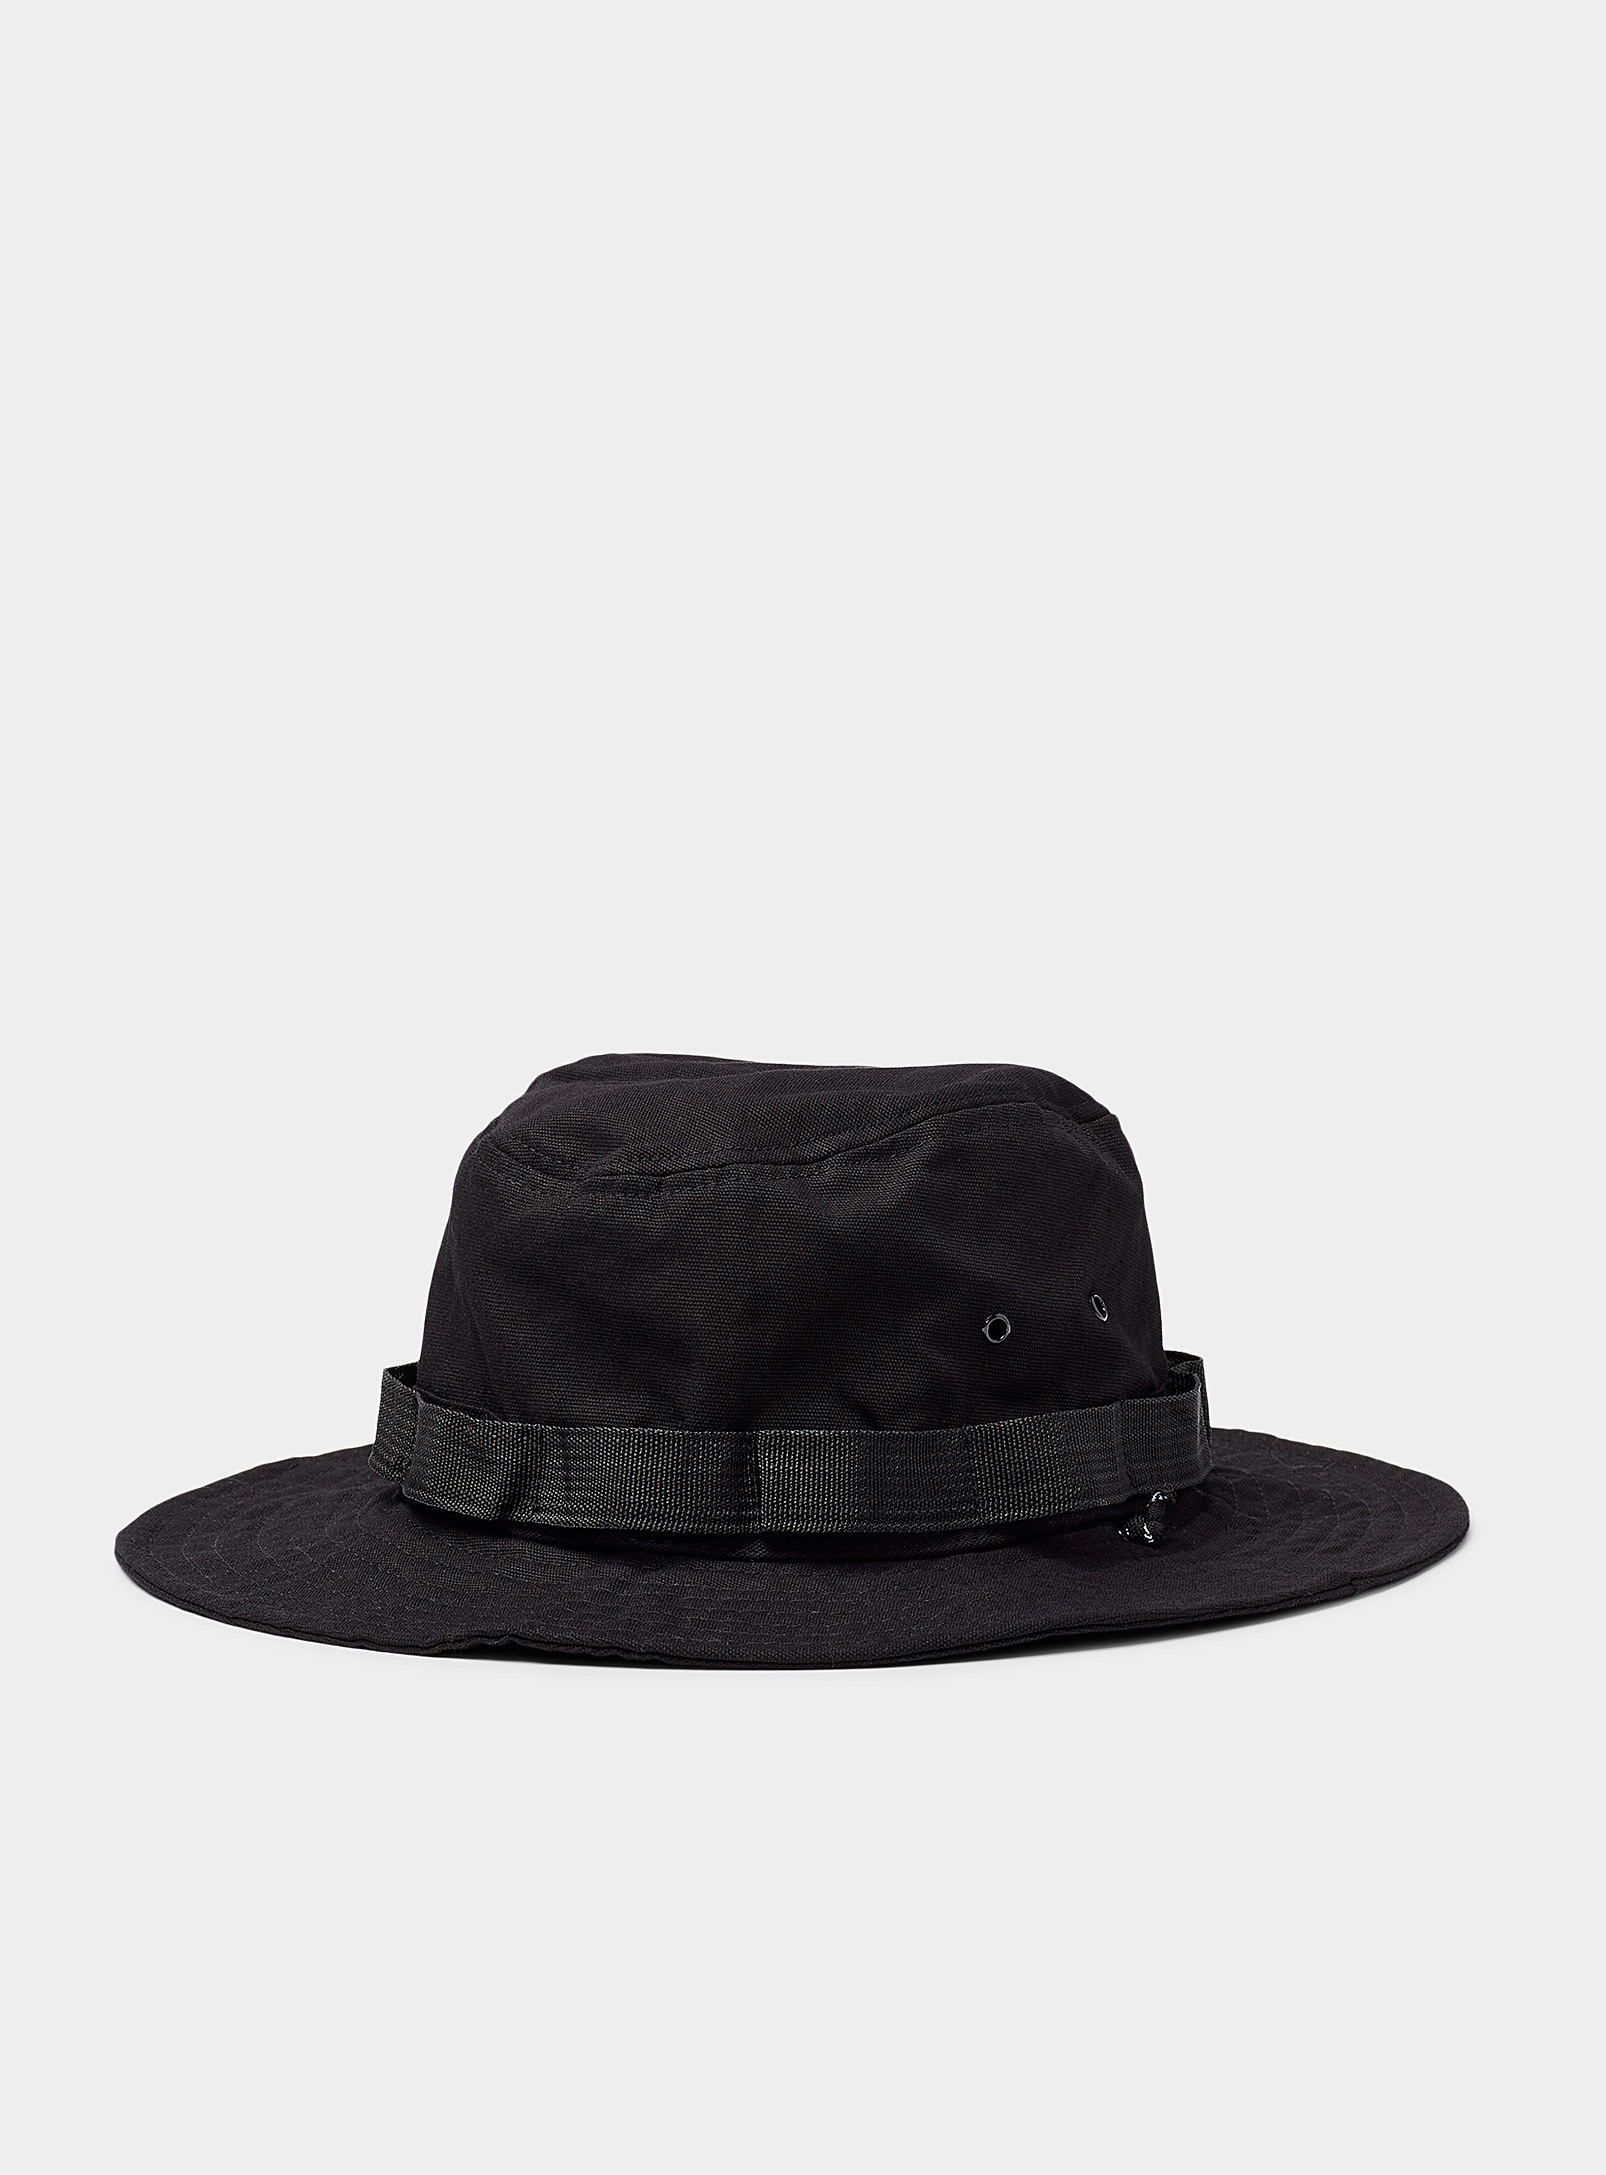 Djab - Men's Utility fisherman hat